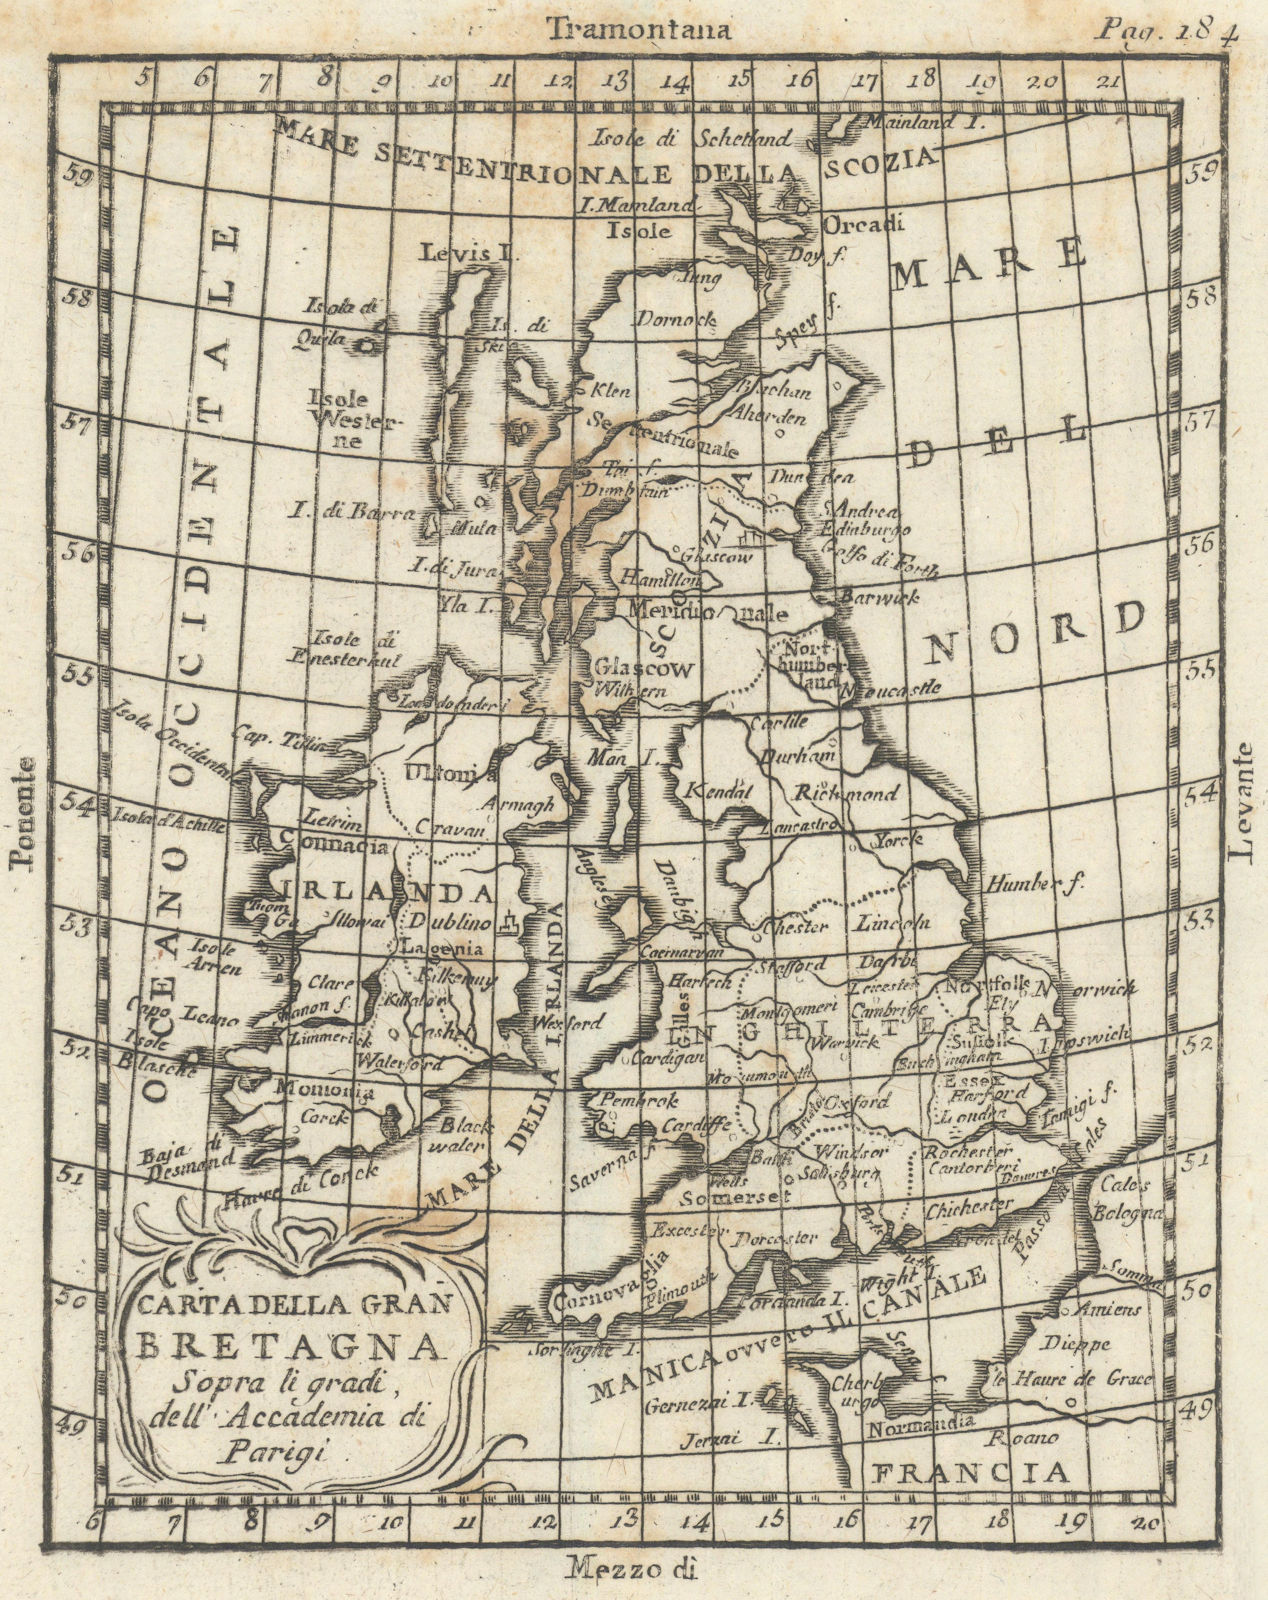 'Carta Della Gran Bretagna '. British Isles antique map by Claudio Buffier 1788